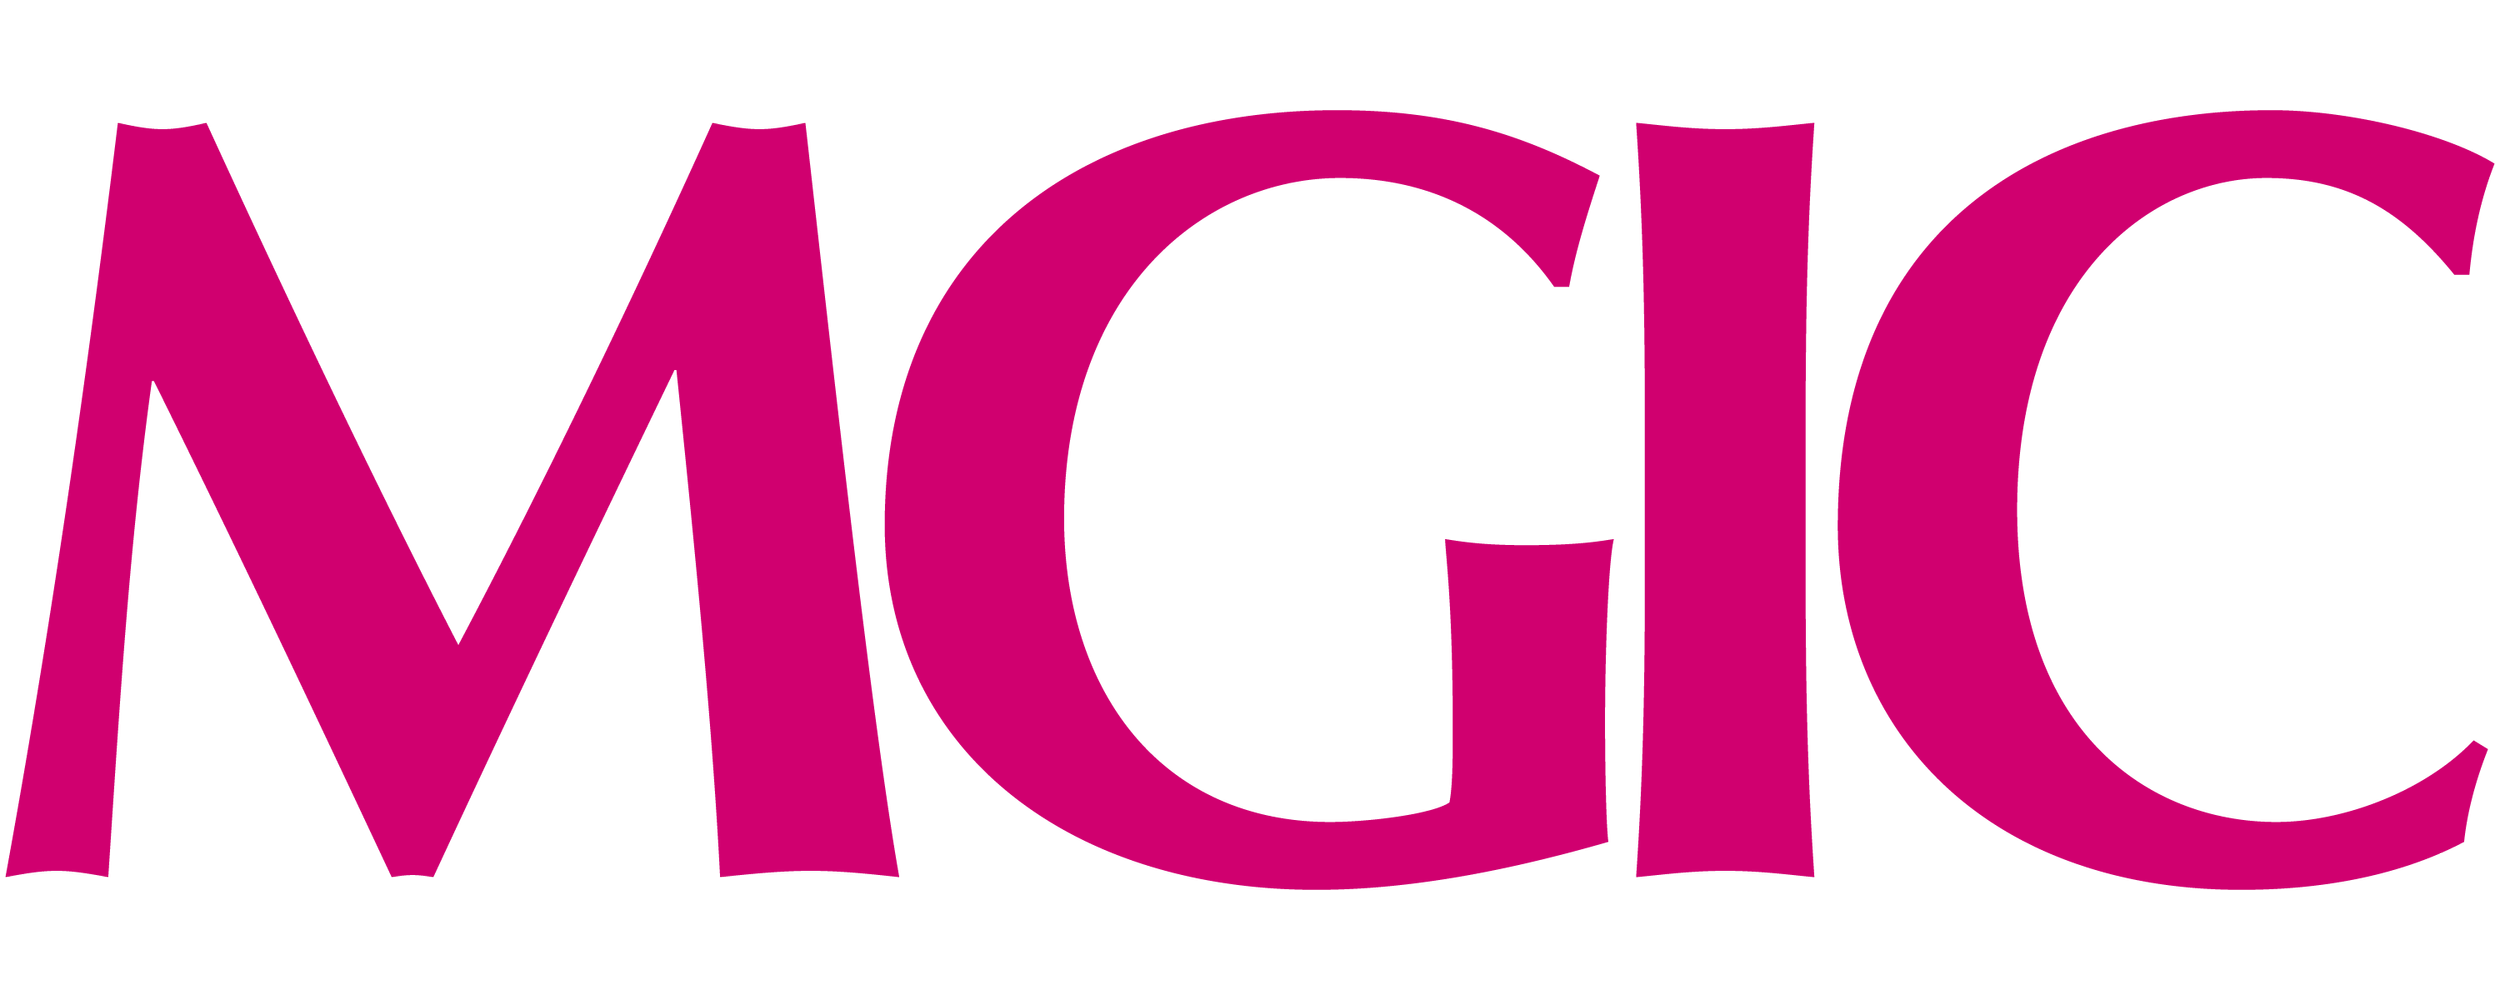 MGIC Logo-3000x1200px-Pink-600ppi copy.png